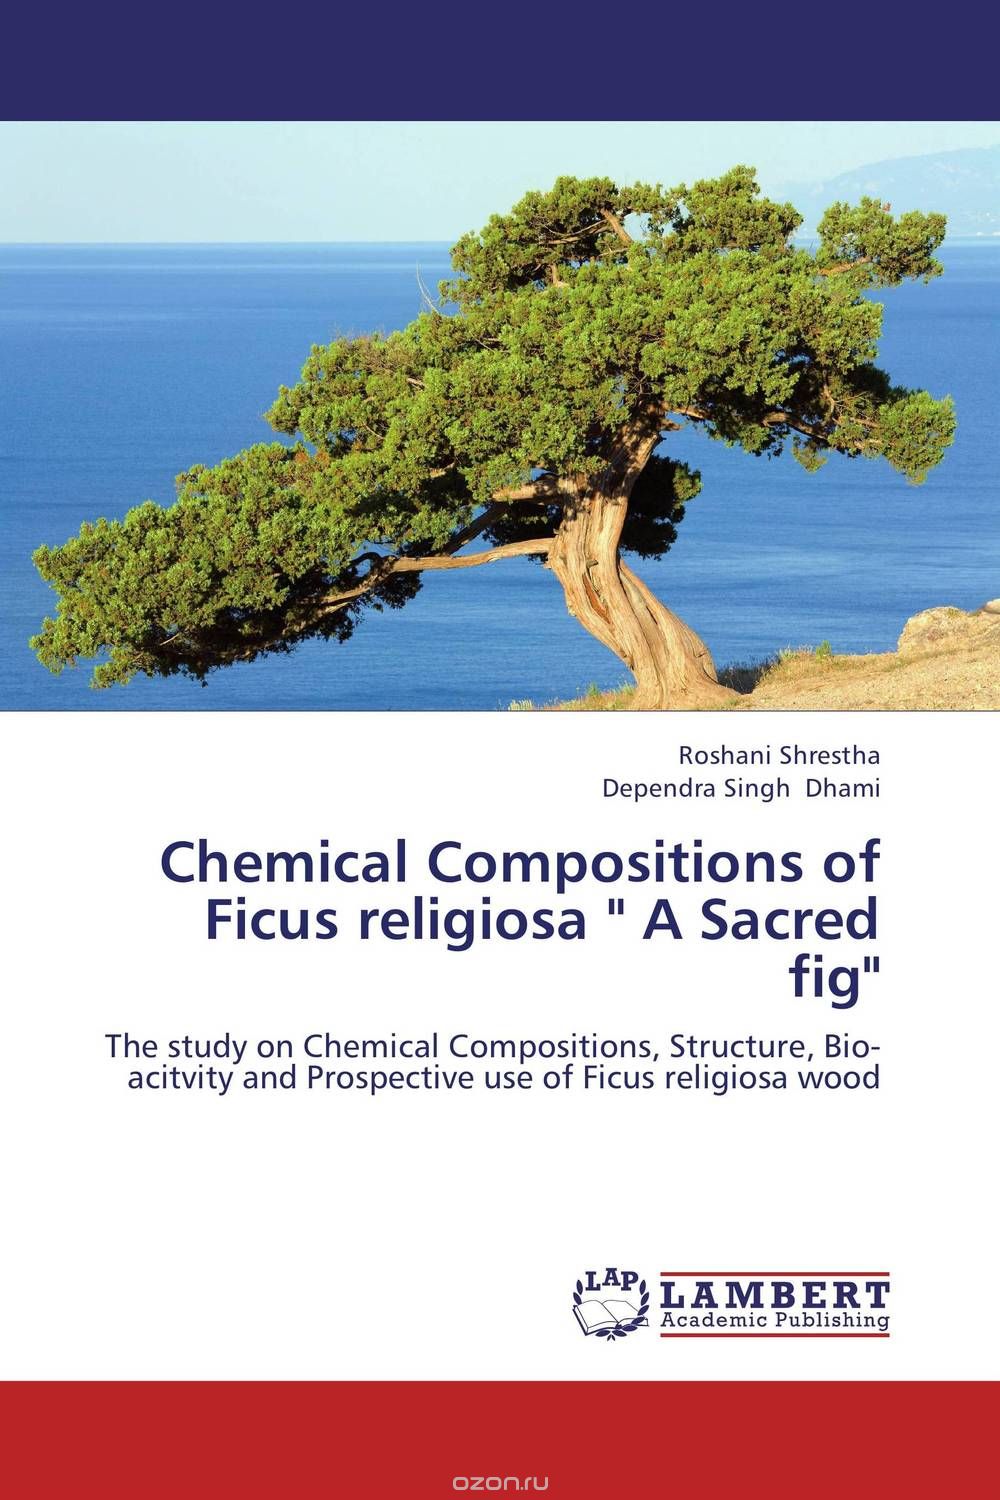 Скачать книгу "Chemical Compositions of Ficus religiosa " A Sacred fig""